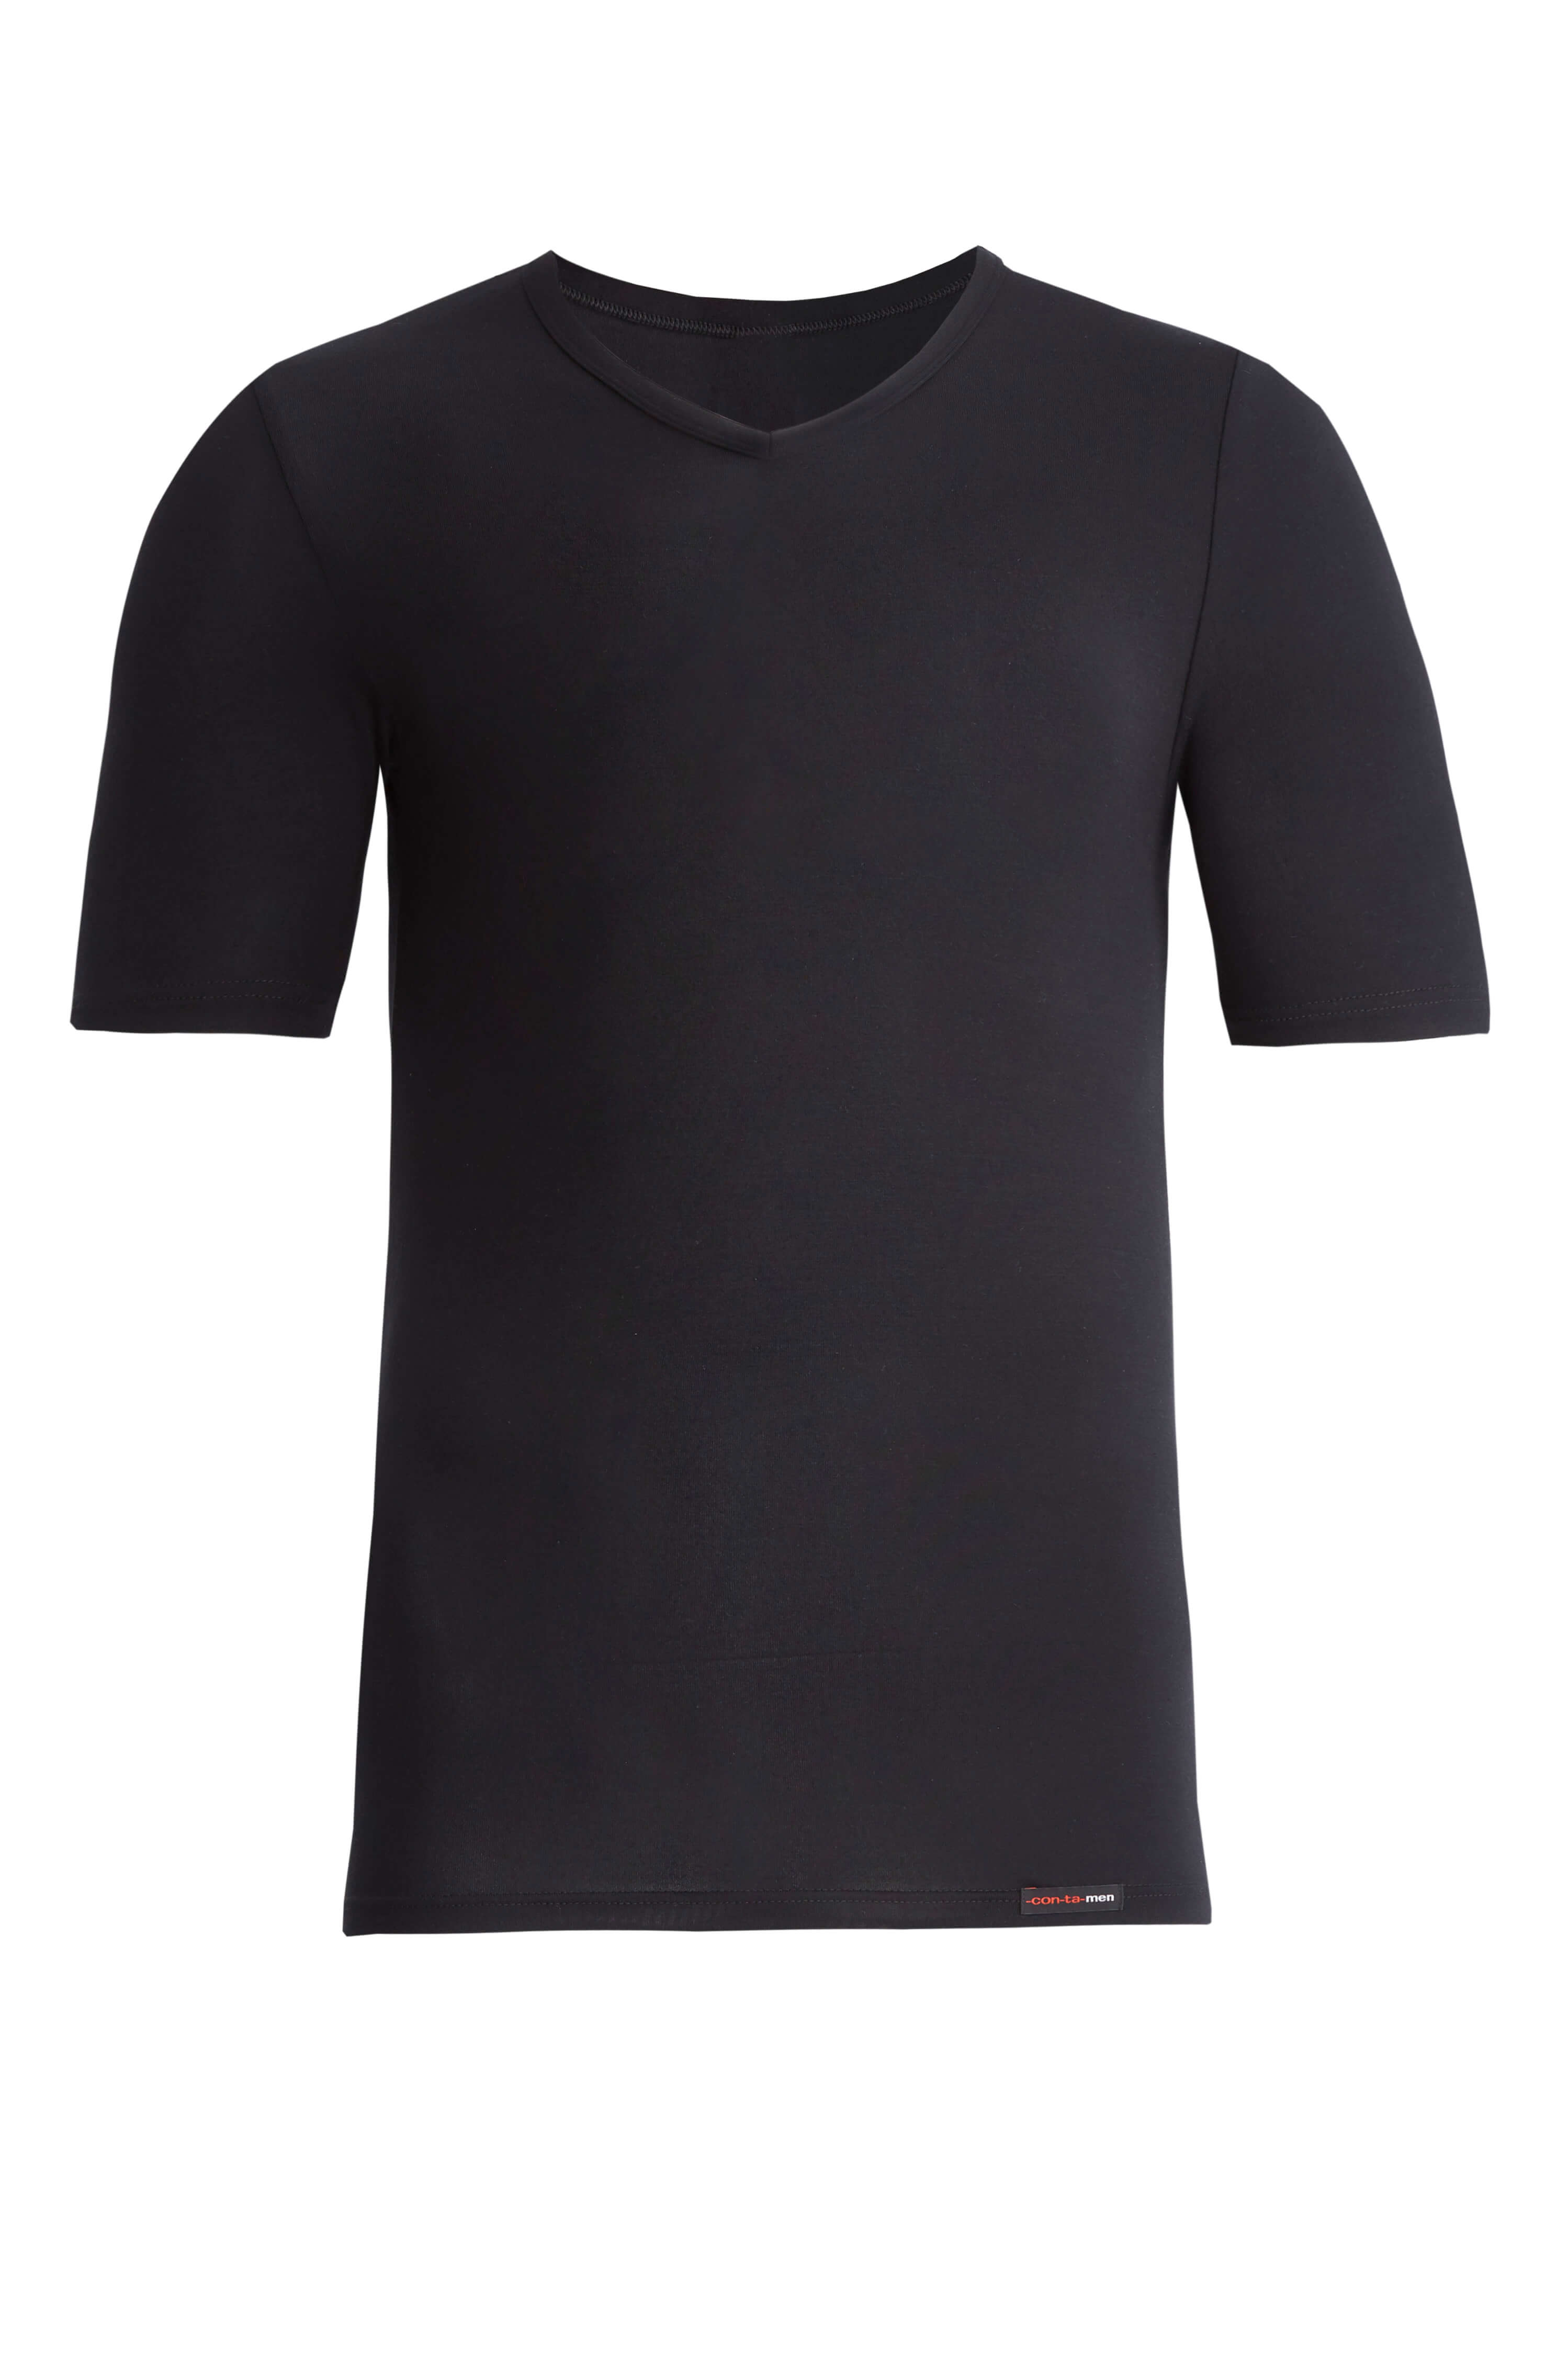 Conta 440 Single-Jersey Herren Shirt 1/4 Arm